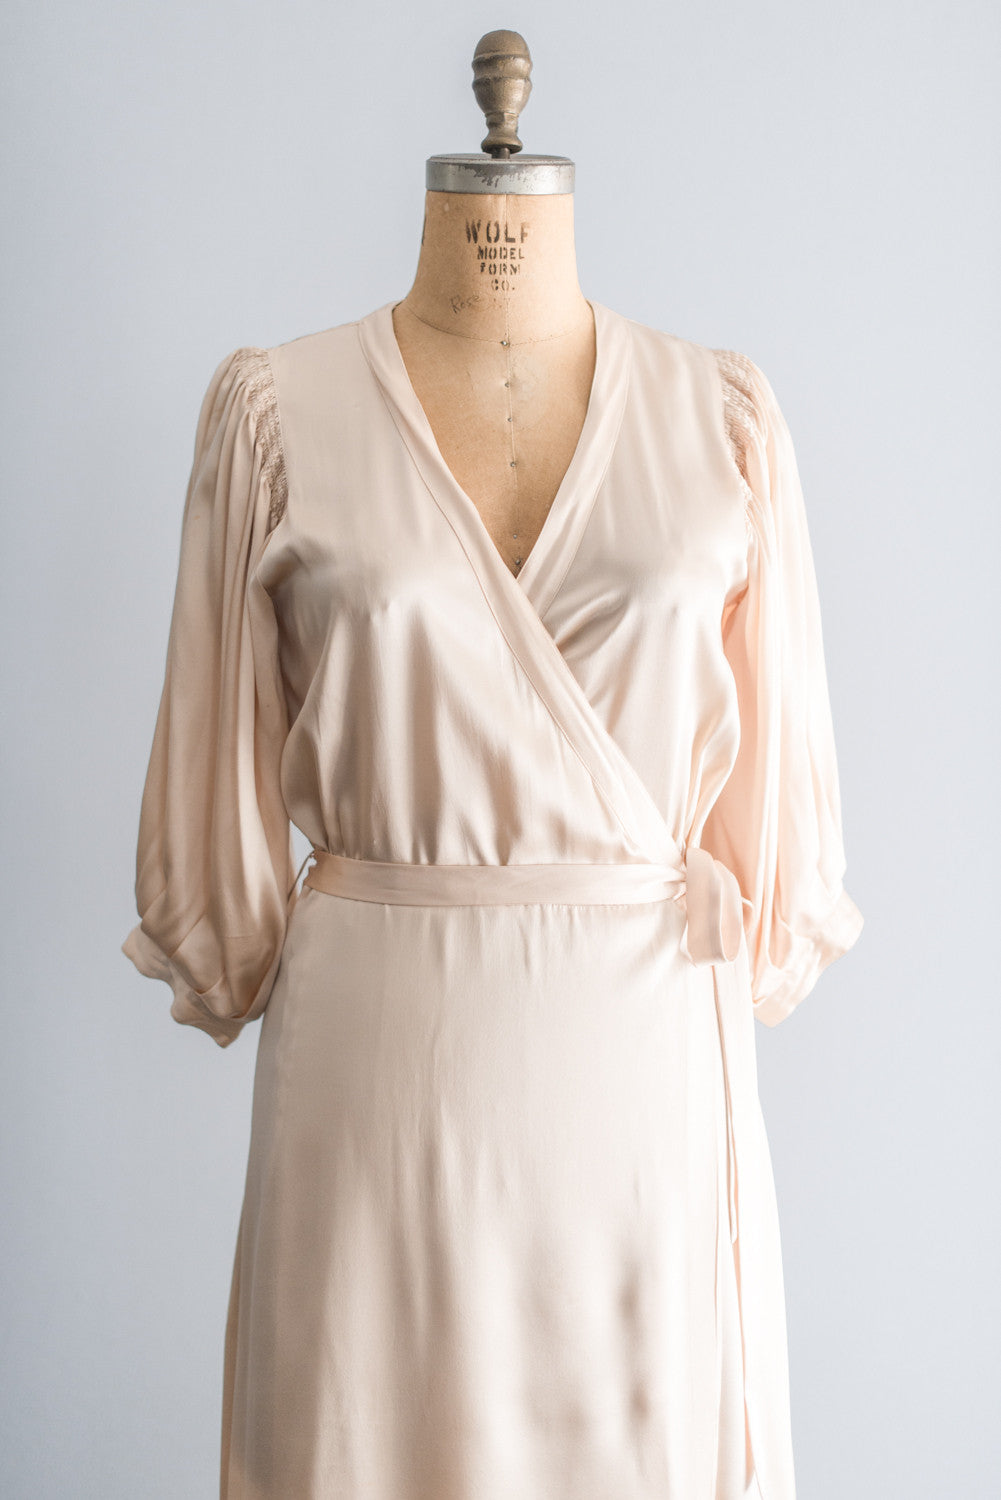 Vintage Silk Light Peach Wrap Dress/Robe - M | G O S S A M E R